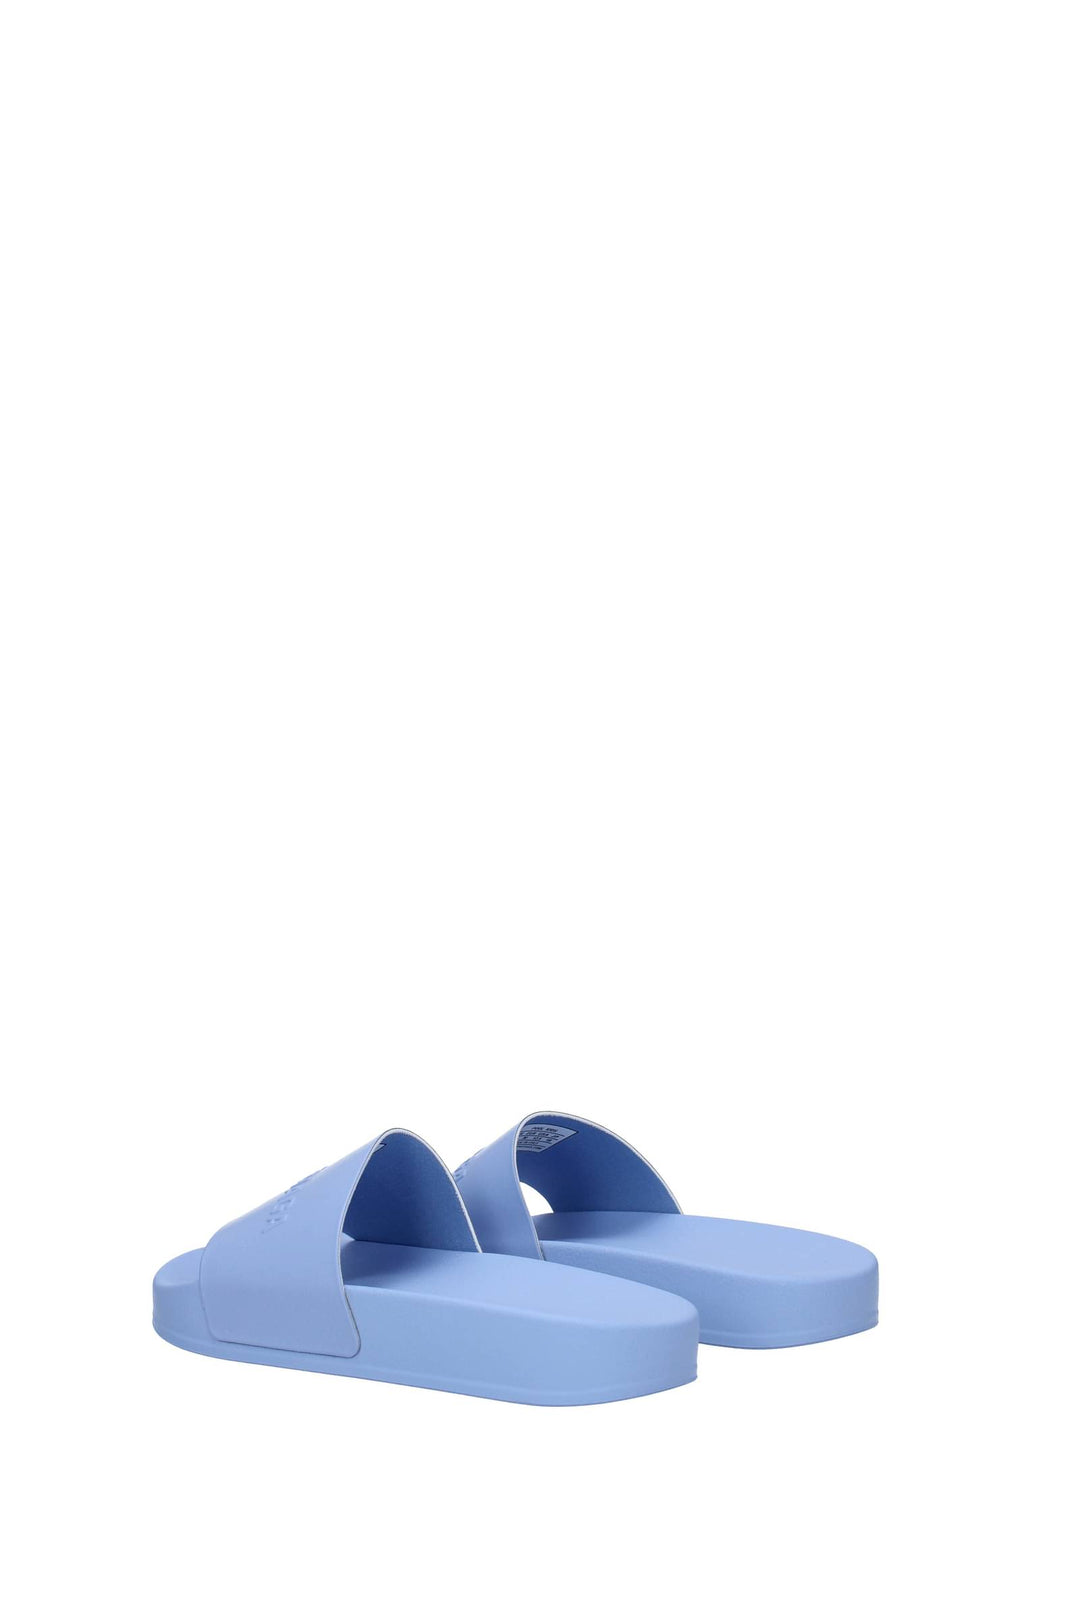 Idee Regalo Slippers Kids Gomma Blu Soft Sky - Balenciaga - Donna